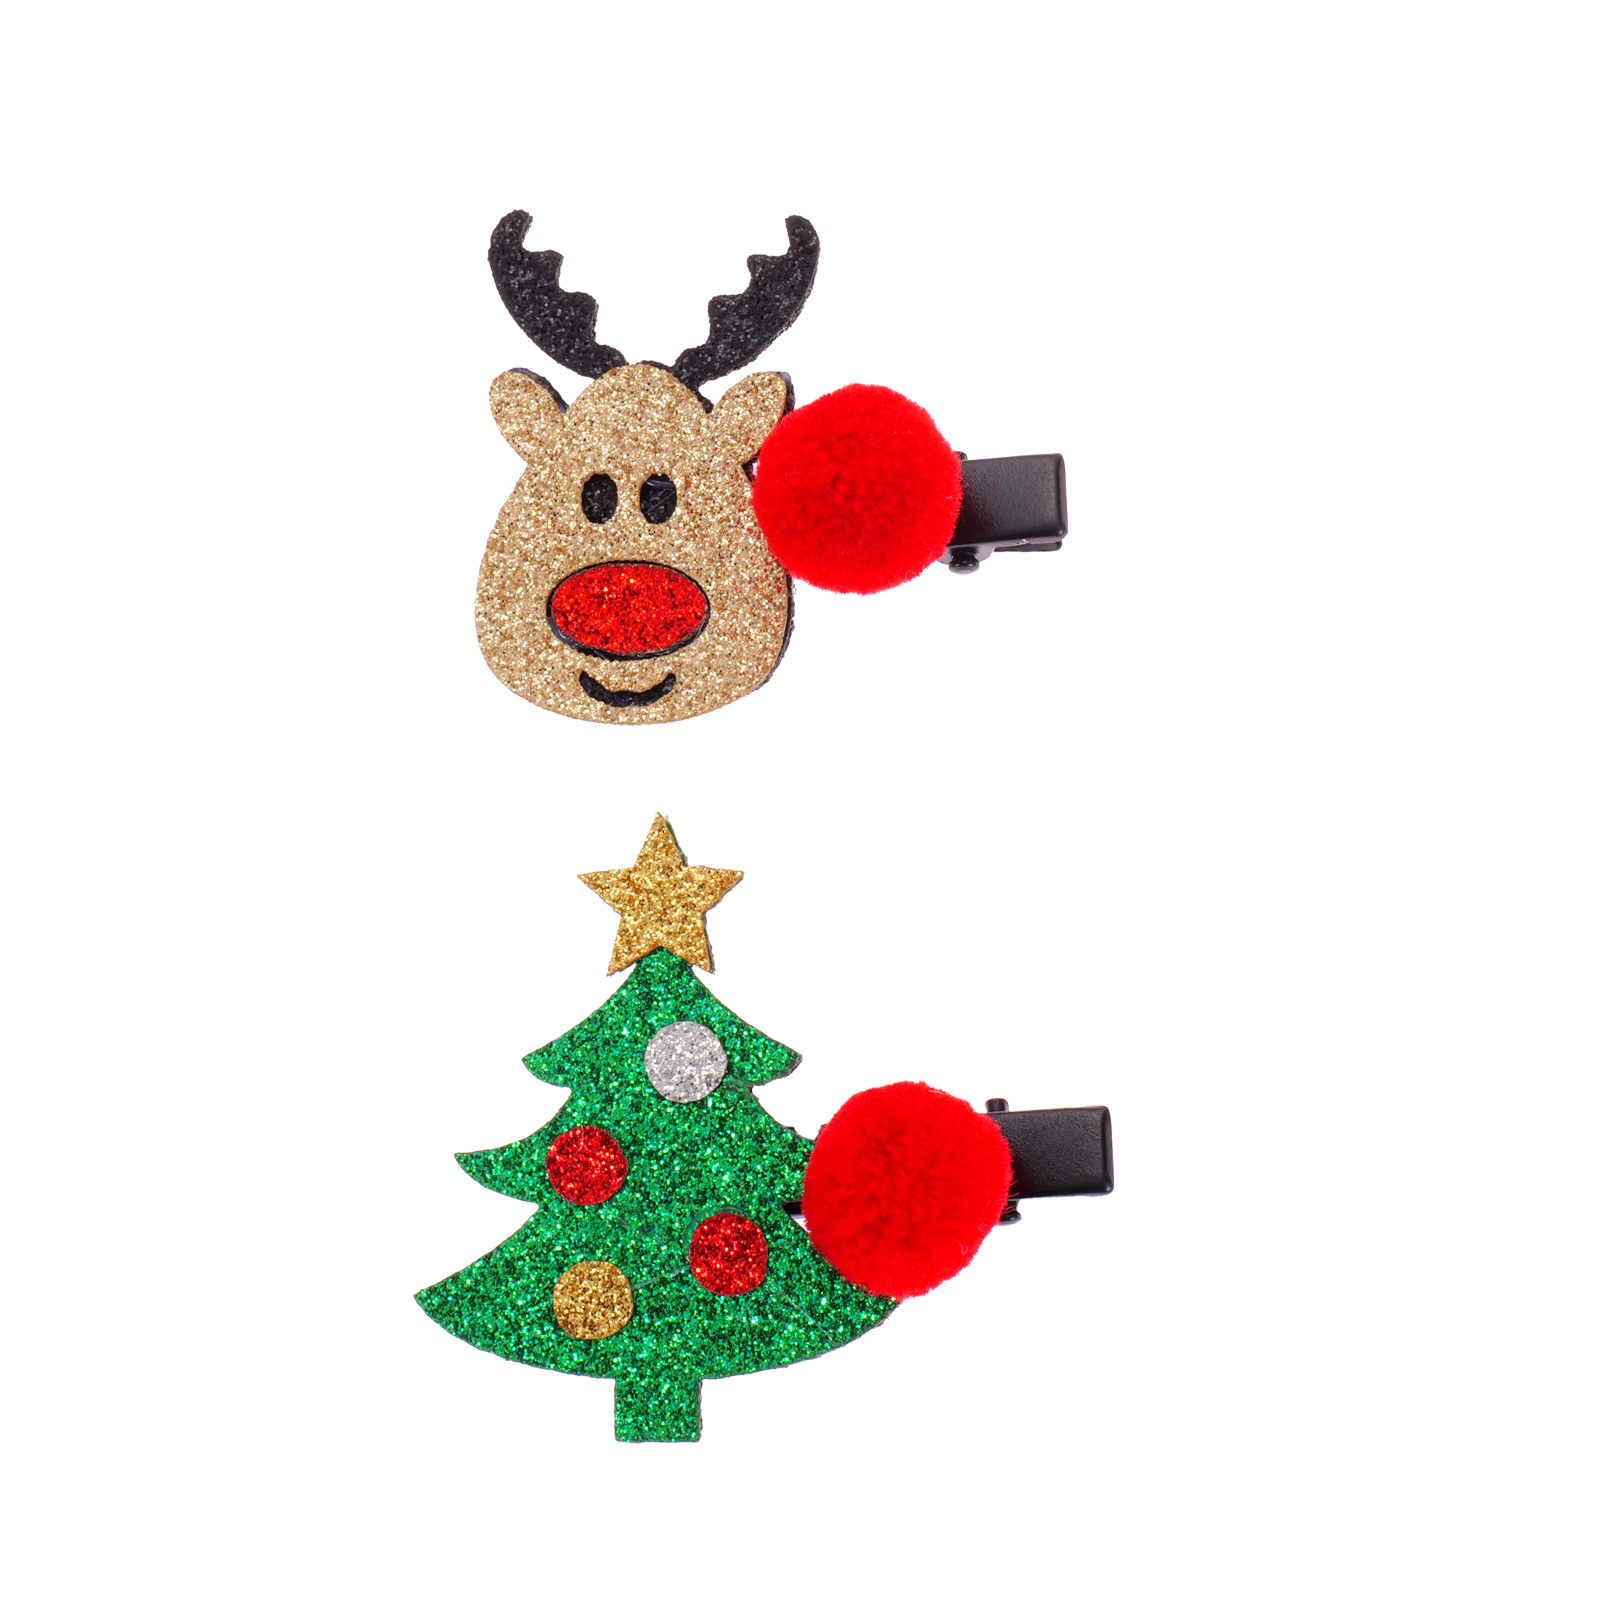 Rudolph and x-mas tree